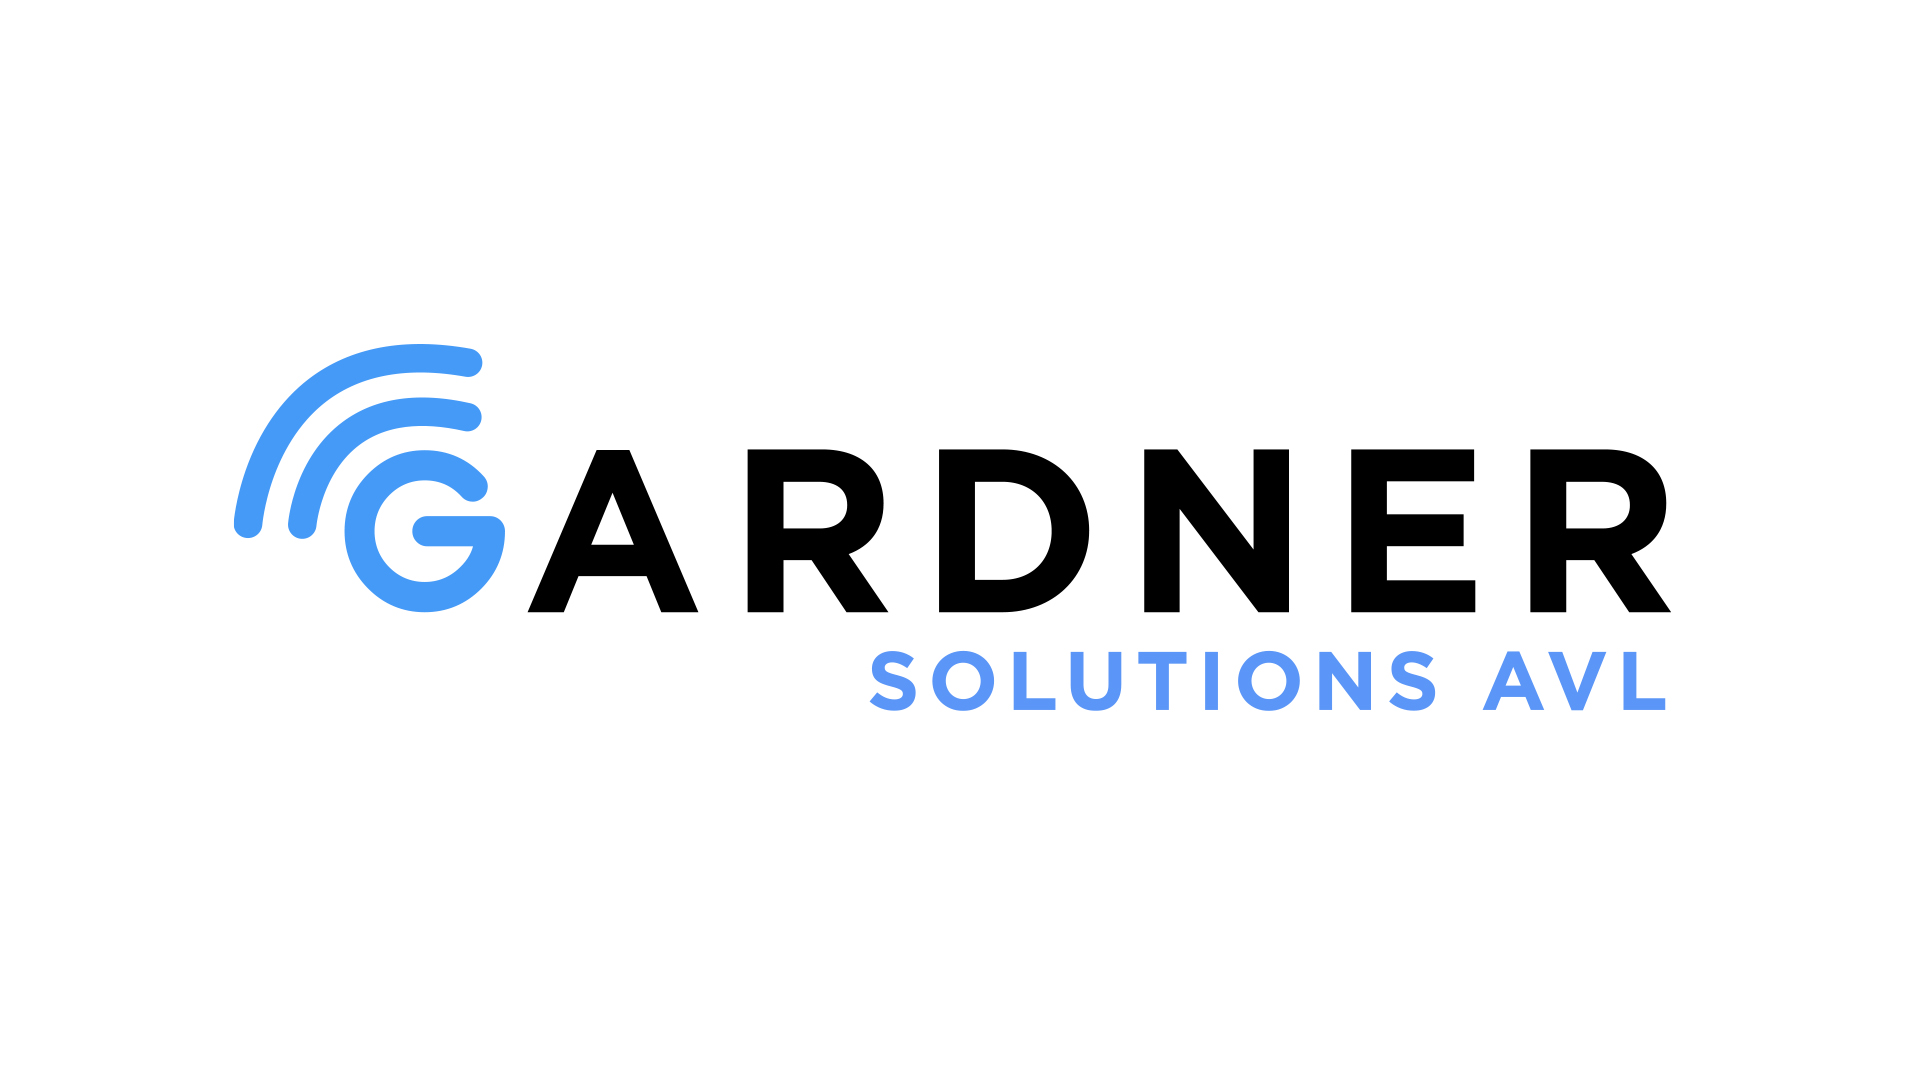 GardnerSolutions